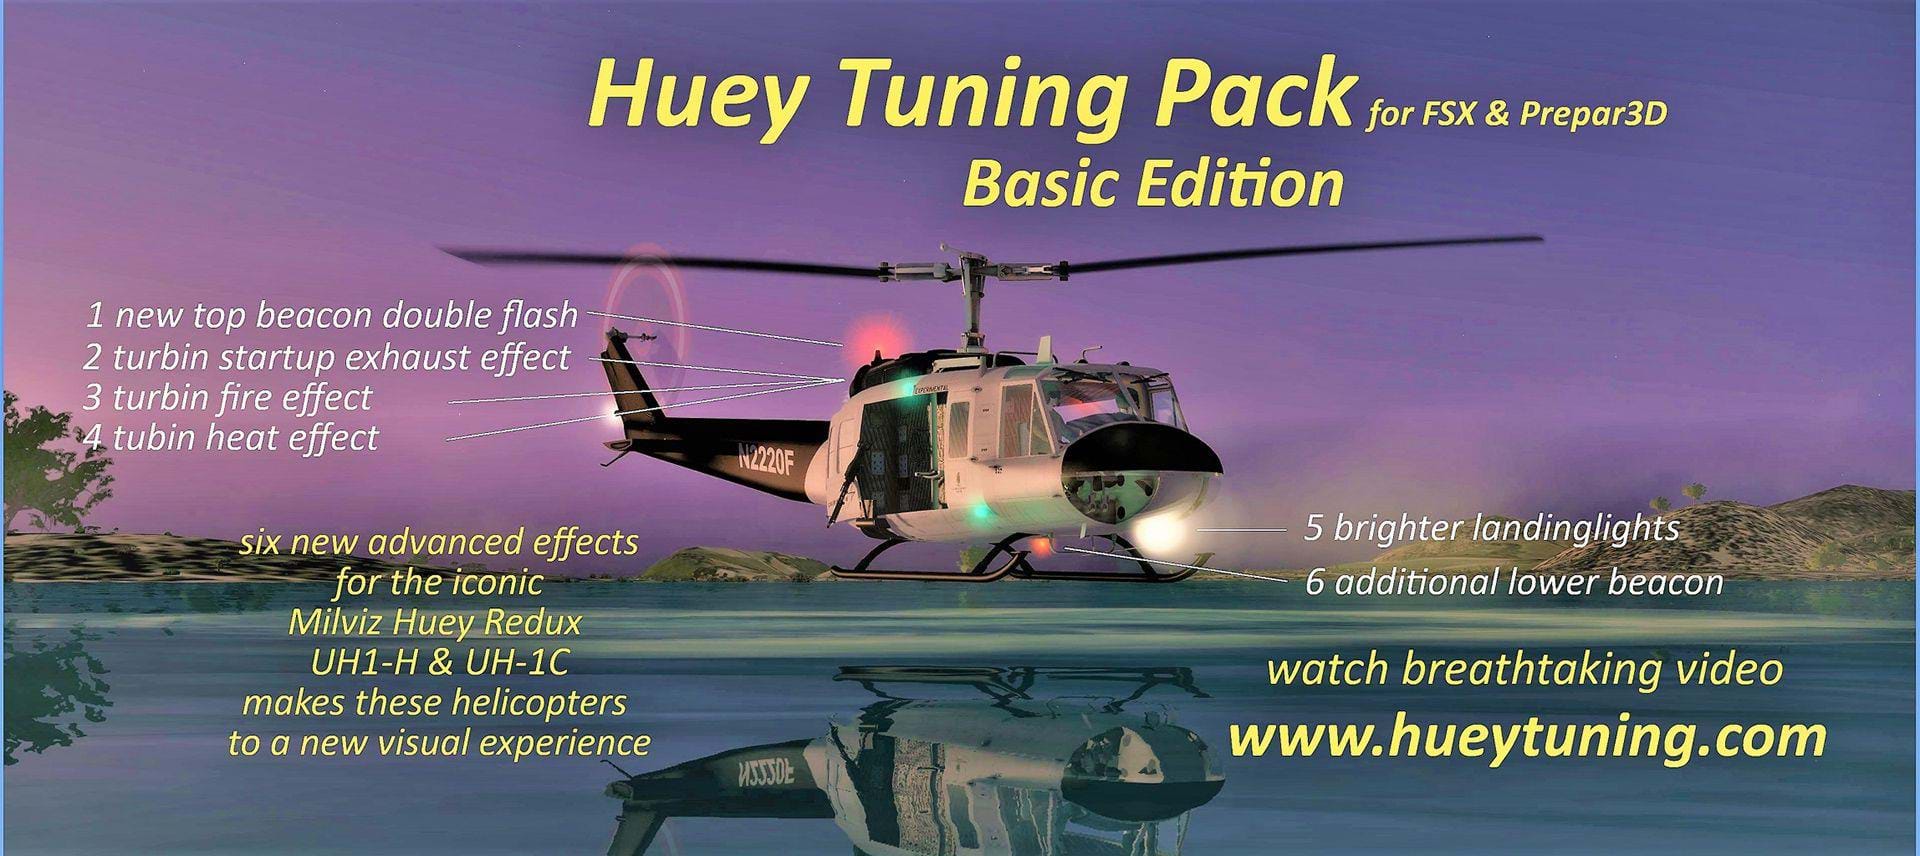 Huey Tuning Pack - Basic Edition